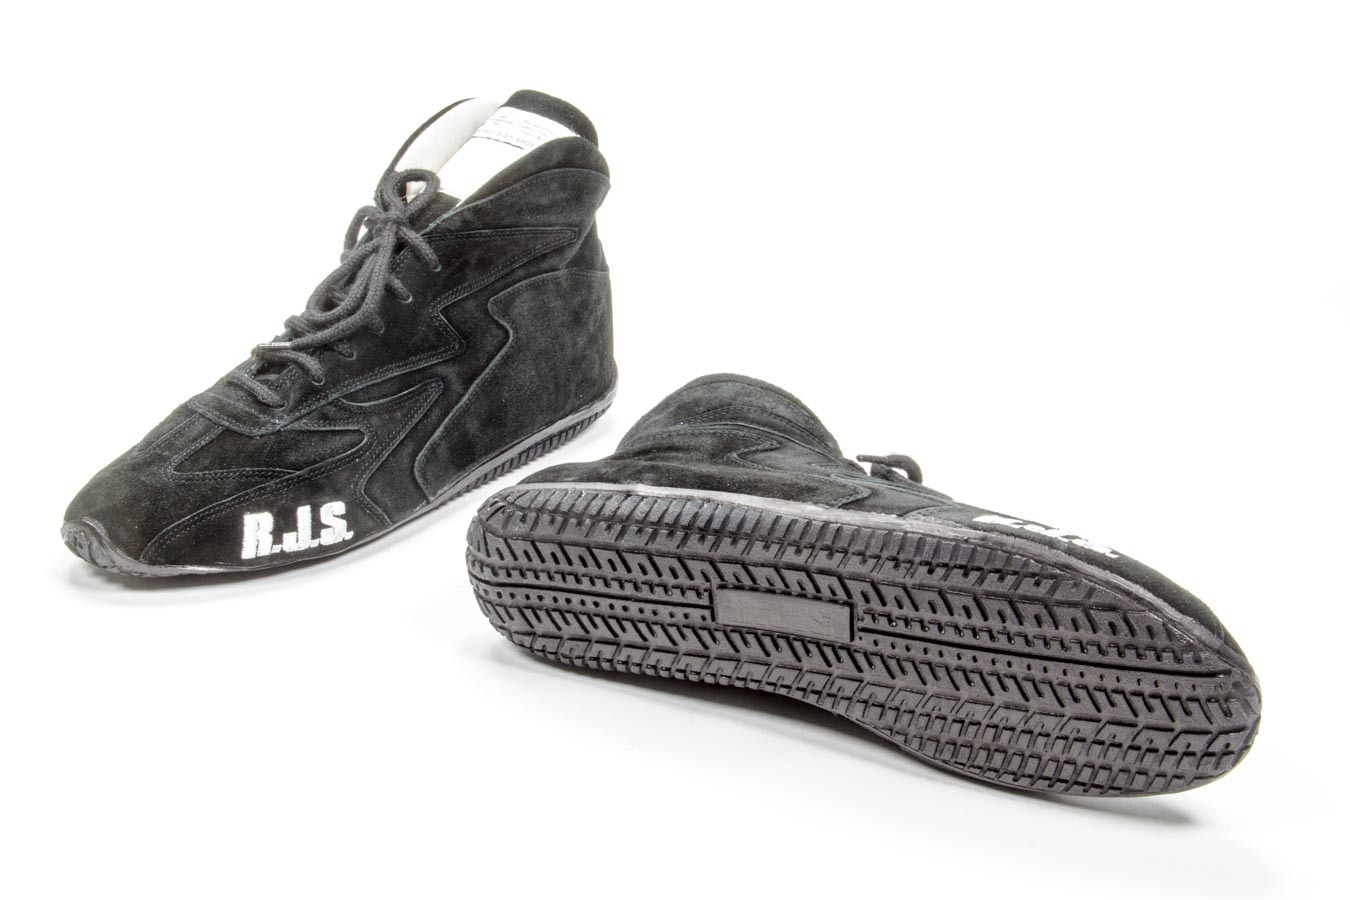 RJS, Redline Racing Shoe Mid-Top Black Size 11 SFI-5